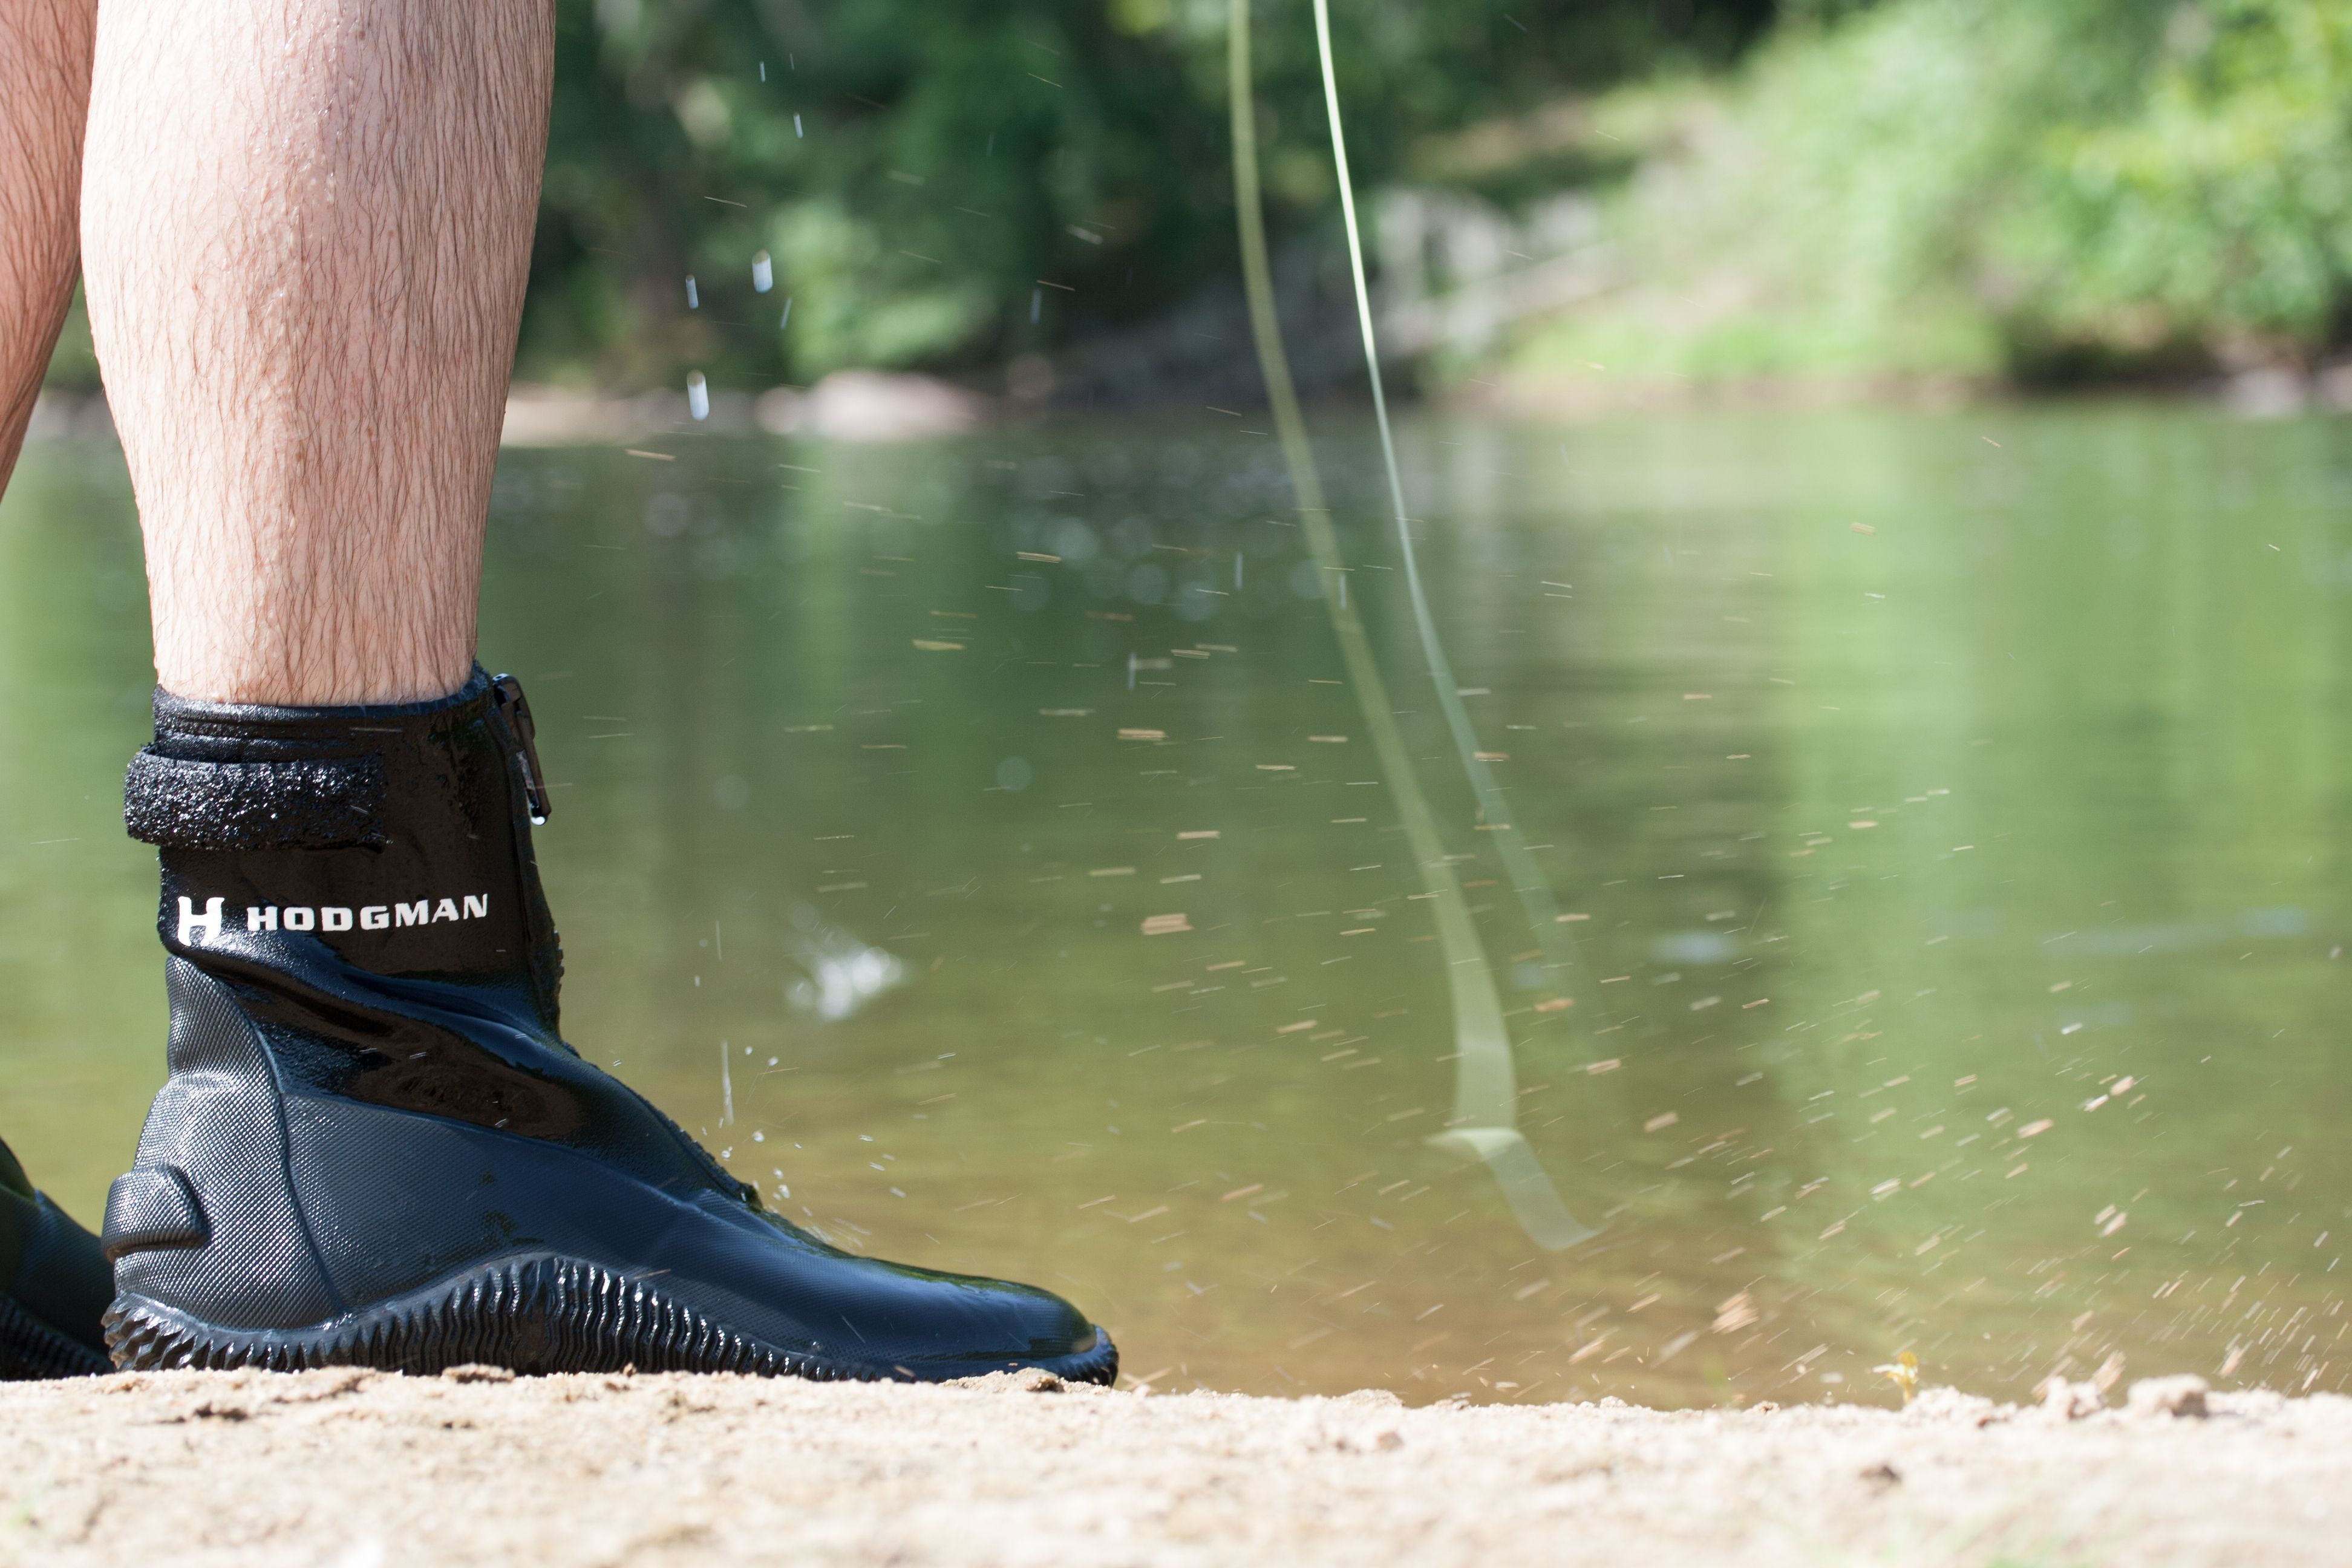 Hodgman Neoprene Wade Shoe Fishing Footwear 